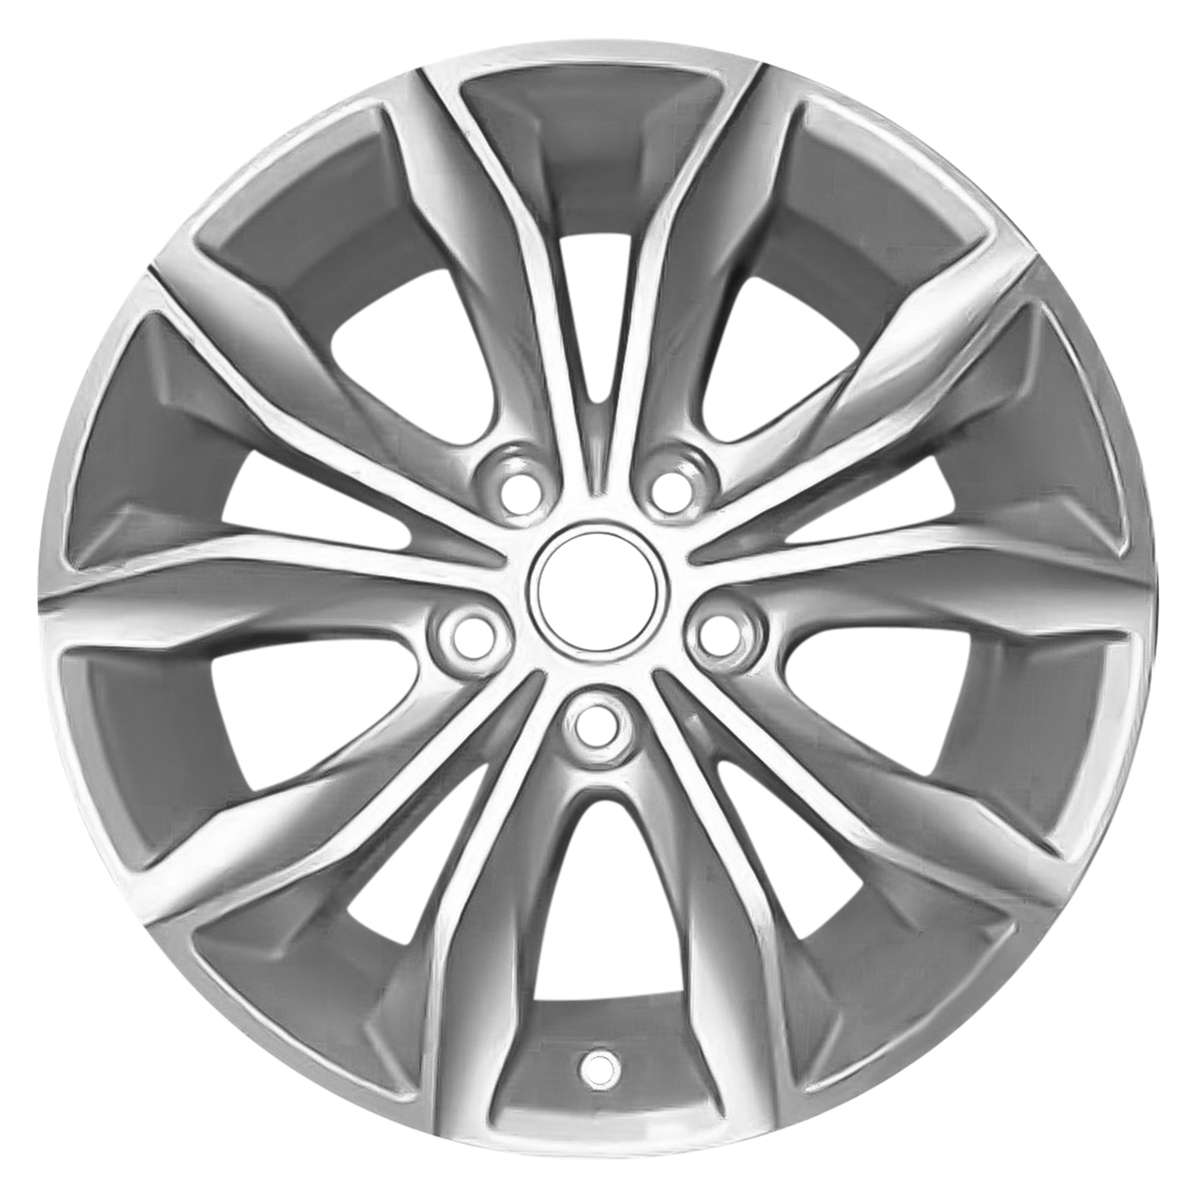 2019 Chevrolet Malibu New 17" Replacement Wheel Rim RW5894S